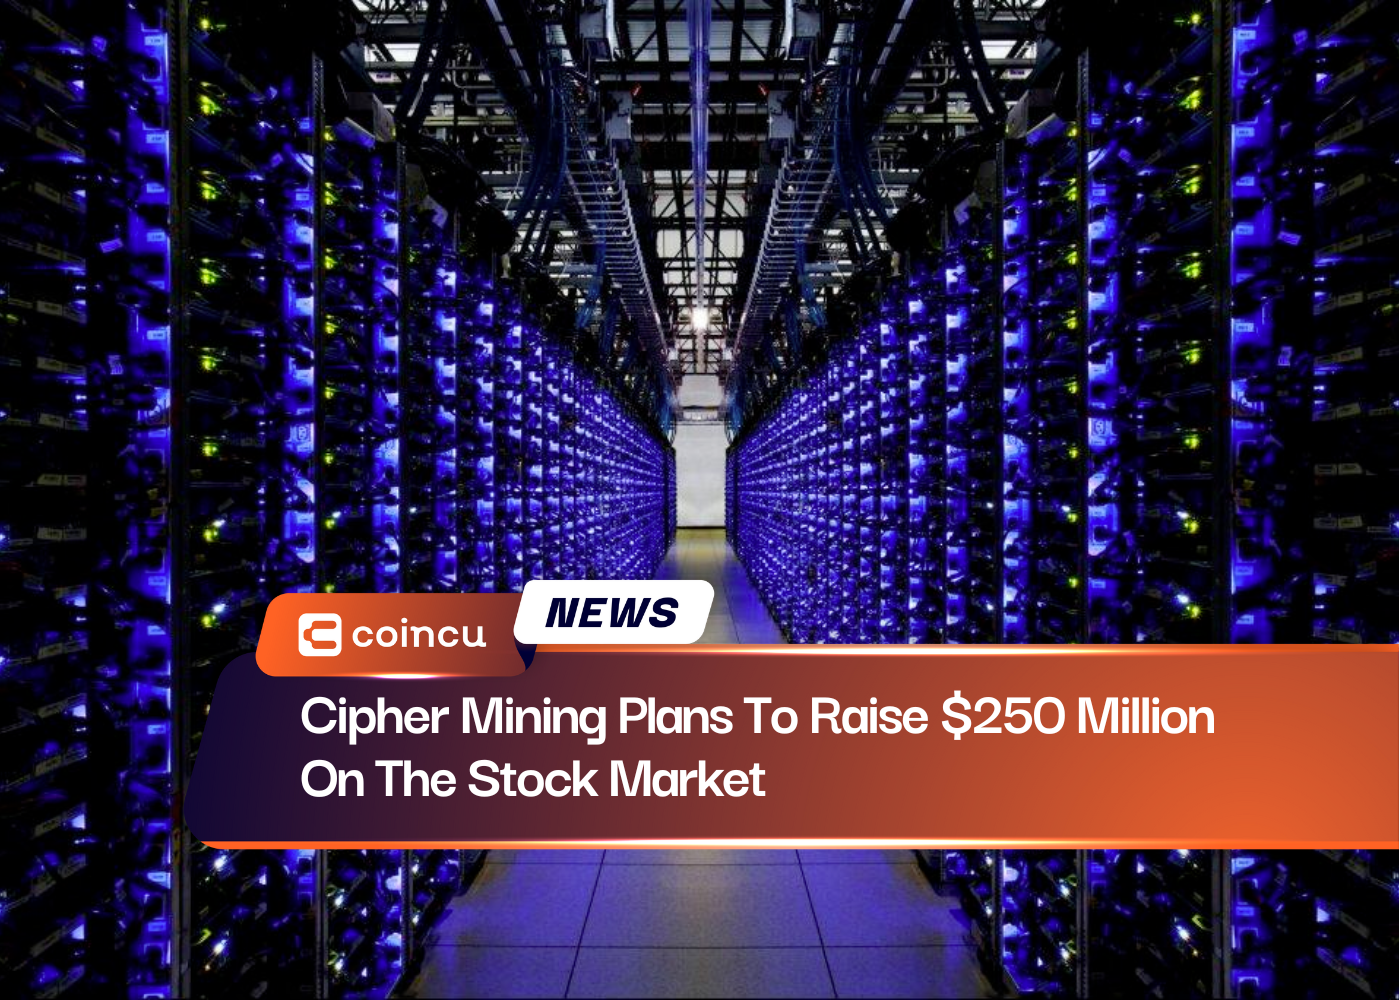 Cipher Mining Plans To Raise $250 Million On The Stock Market